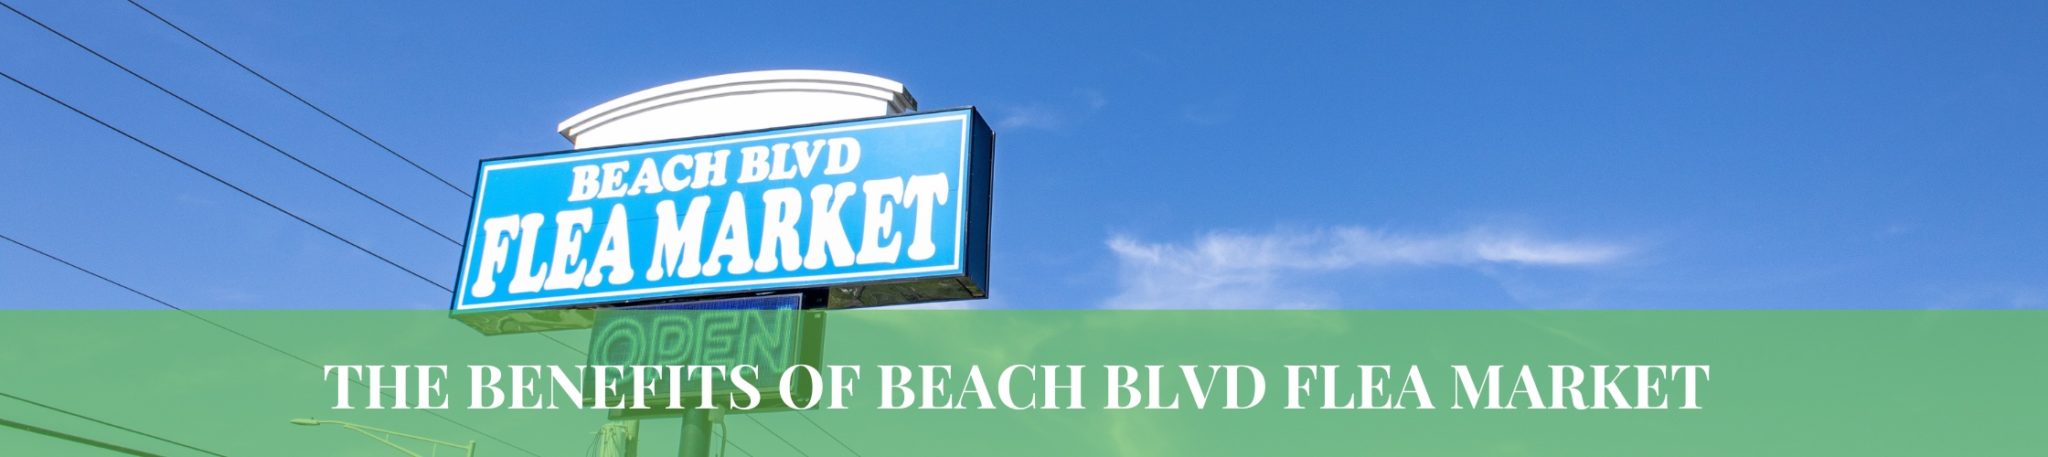 The benefits of Beach Blvd Flea Market